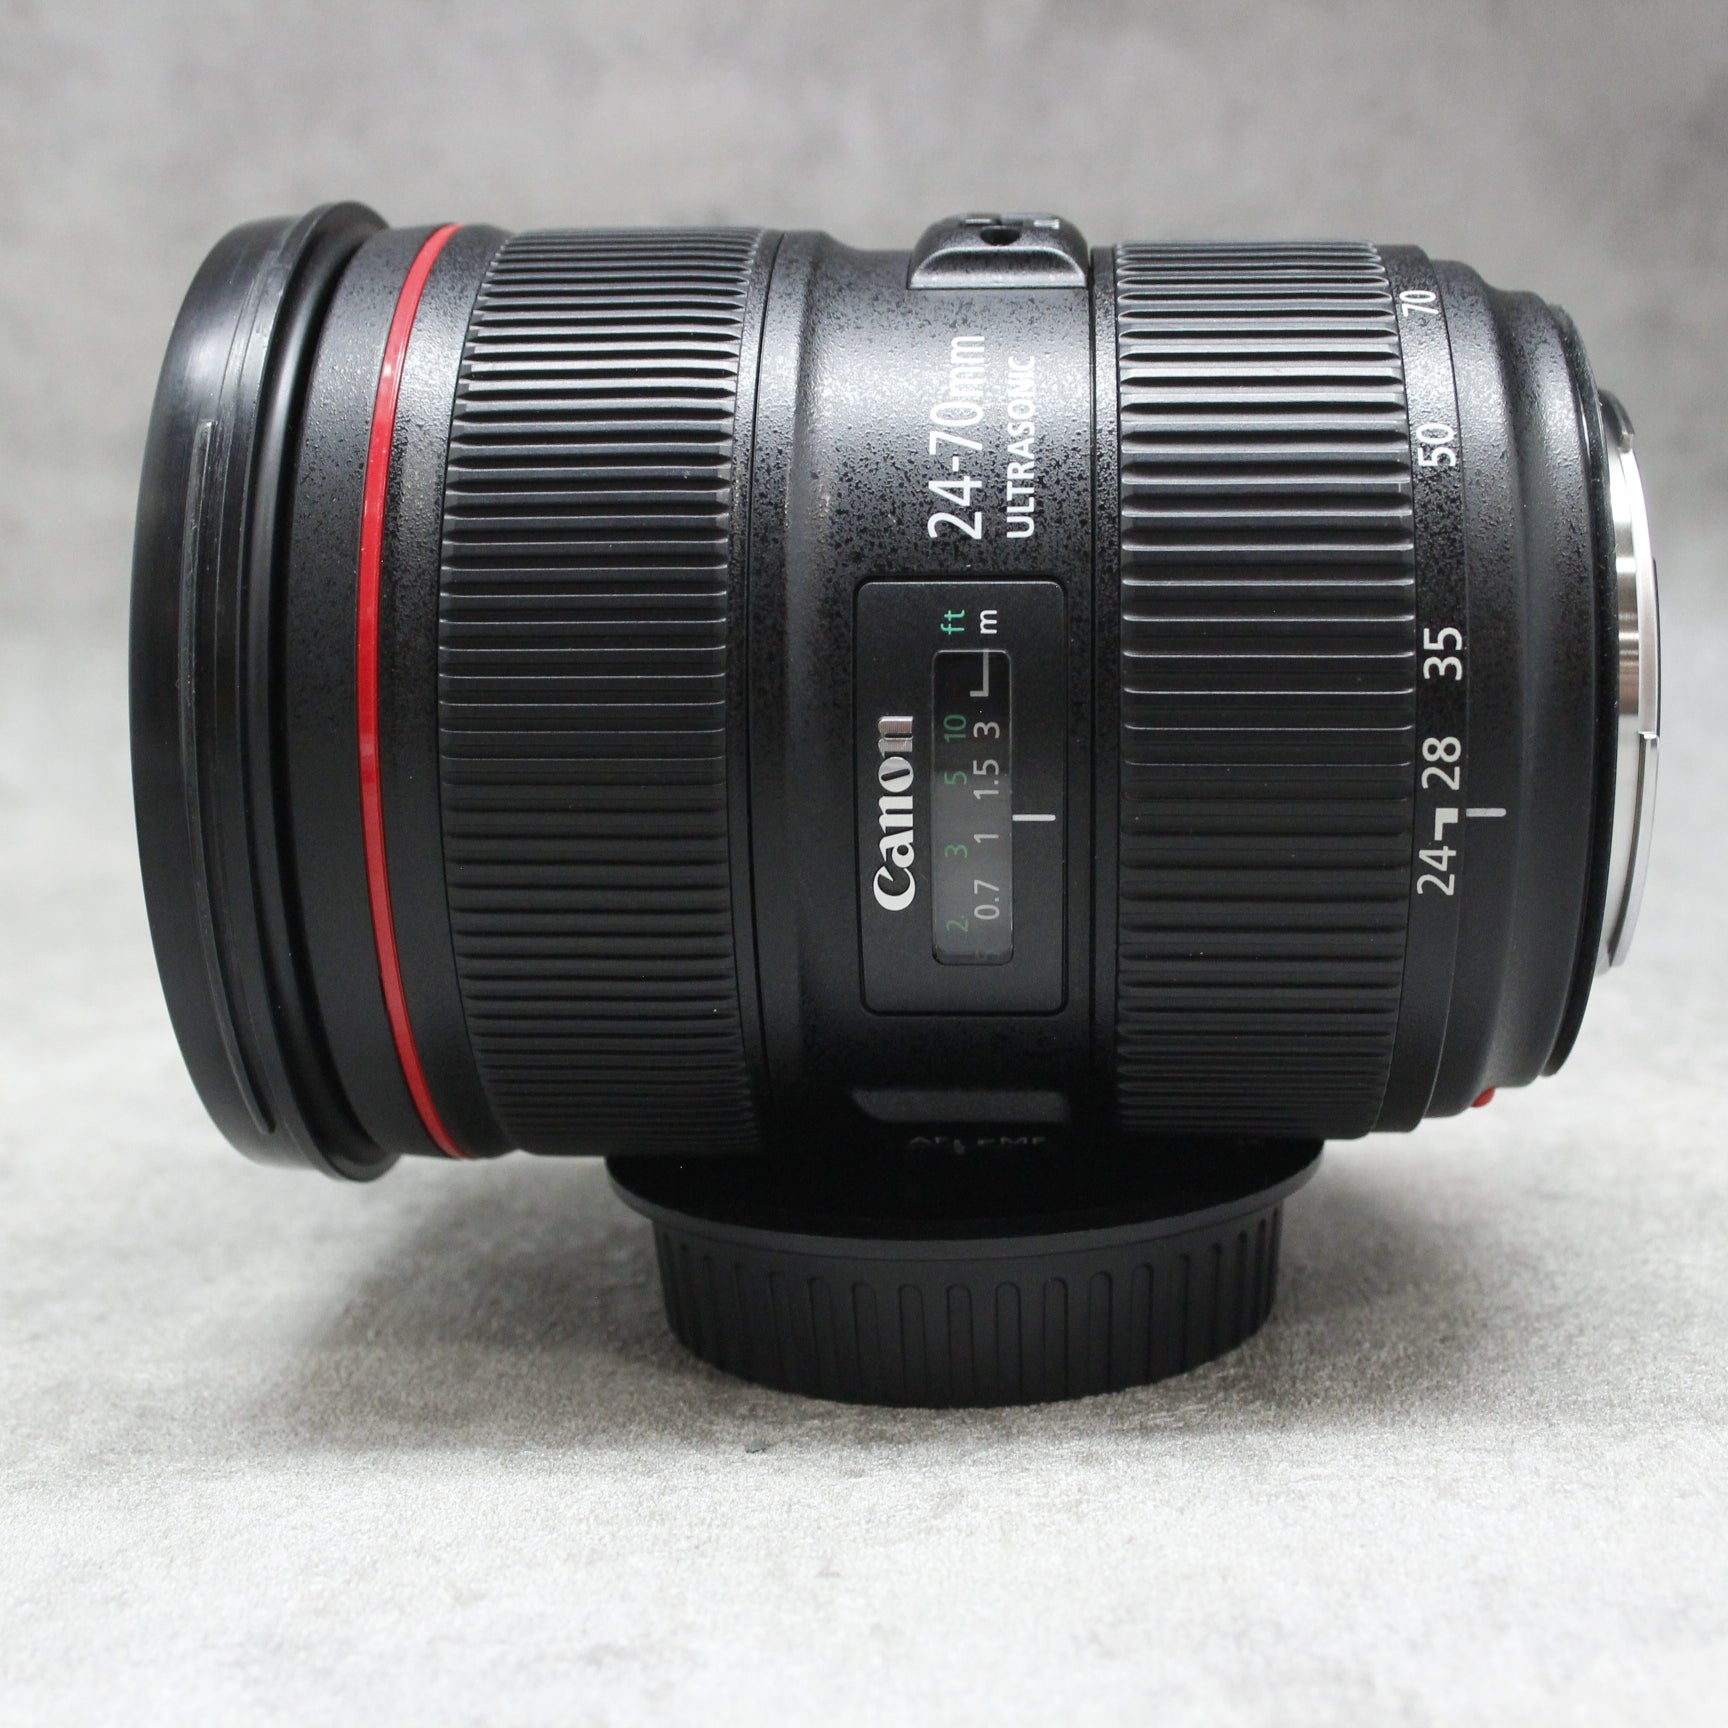 中古品 Canon EF24-70mm F2.8L II USM【8月26日(土) youtube生配信でご紹介】